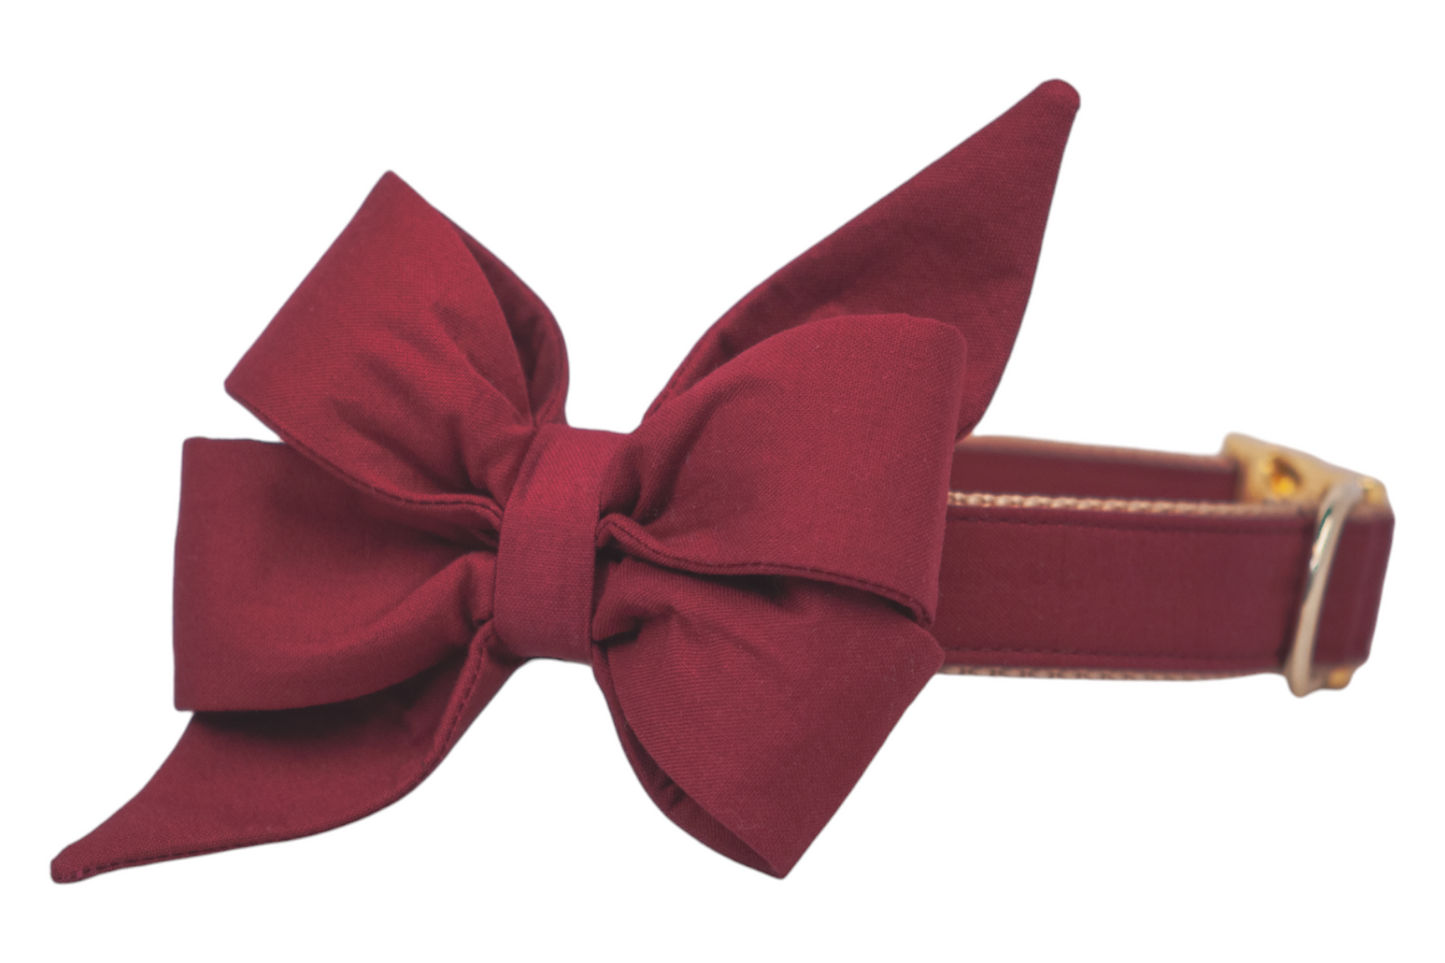 Crimson Belle Bow Dog Collar